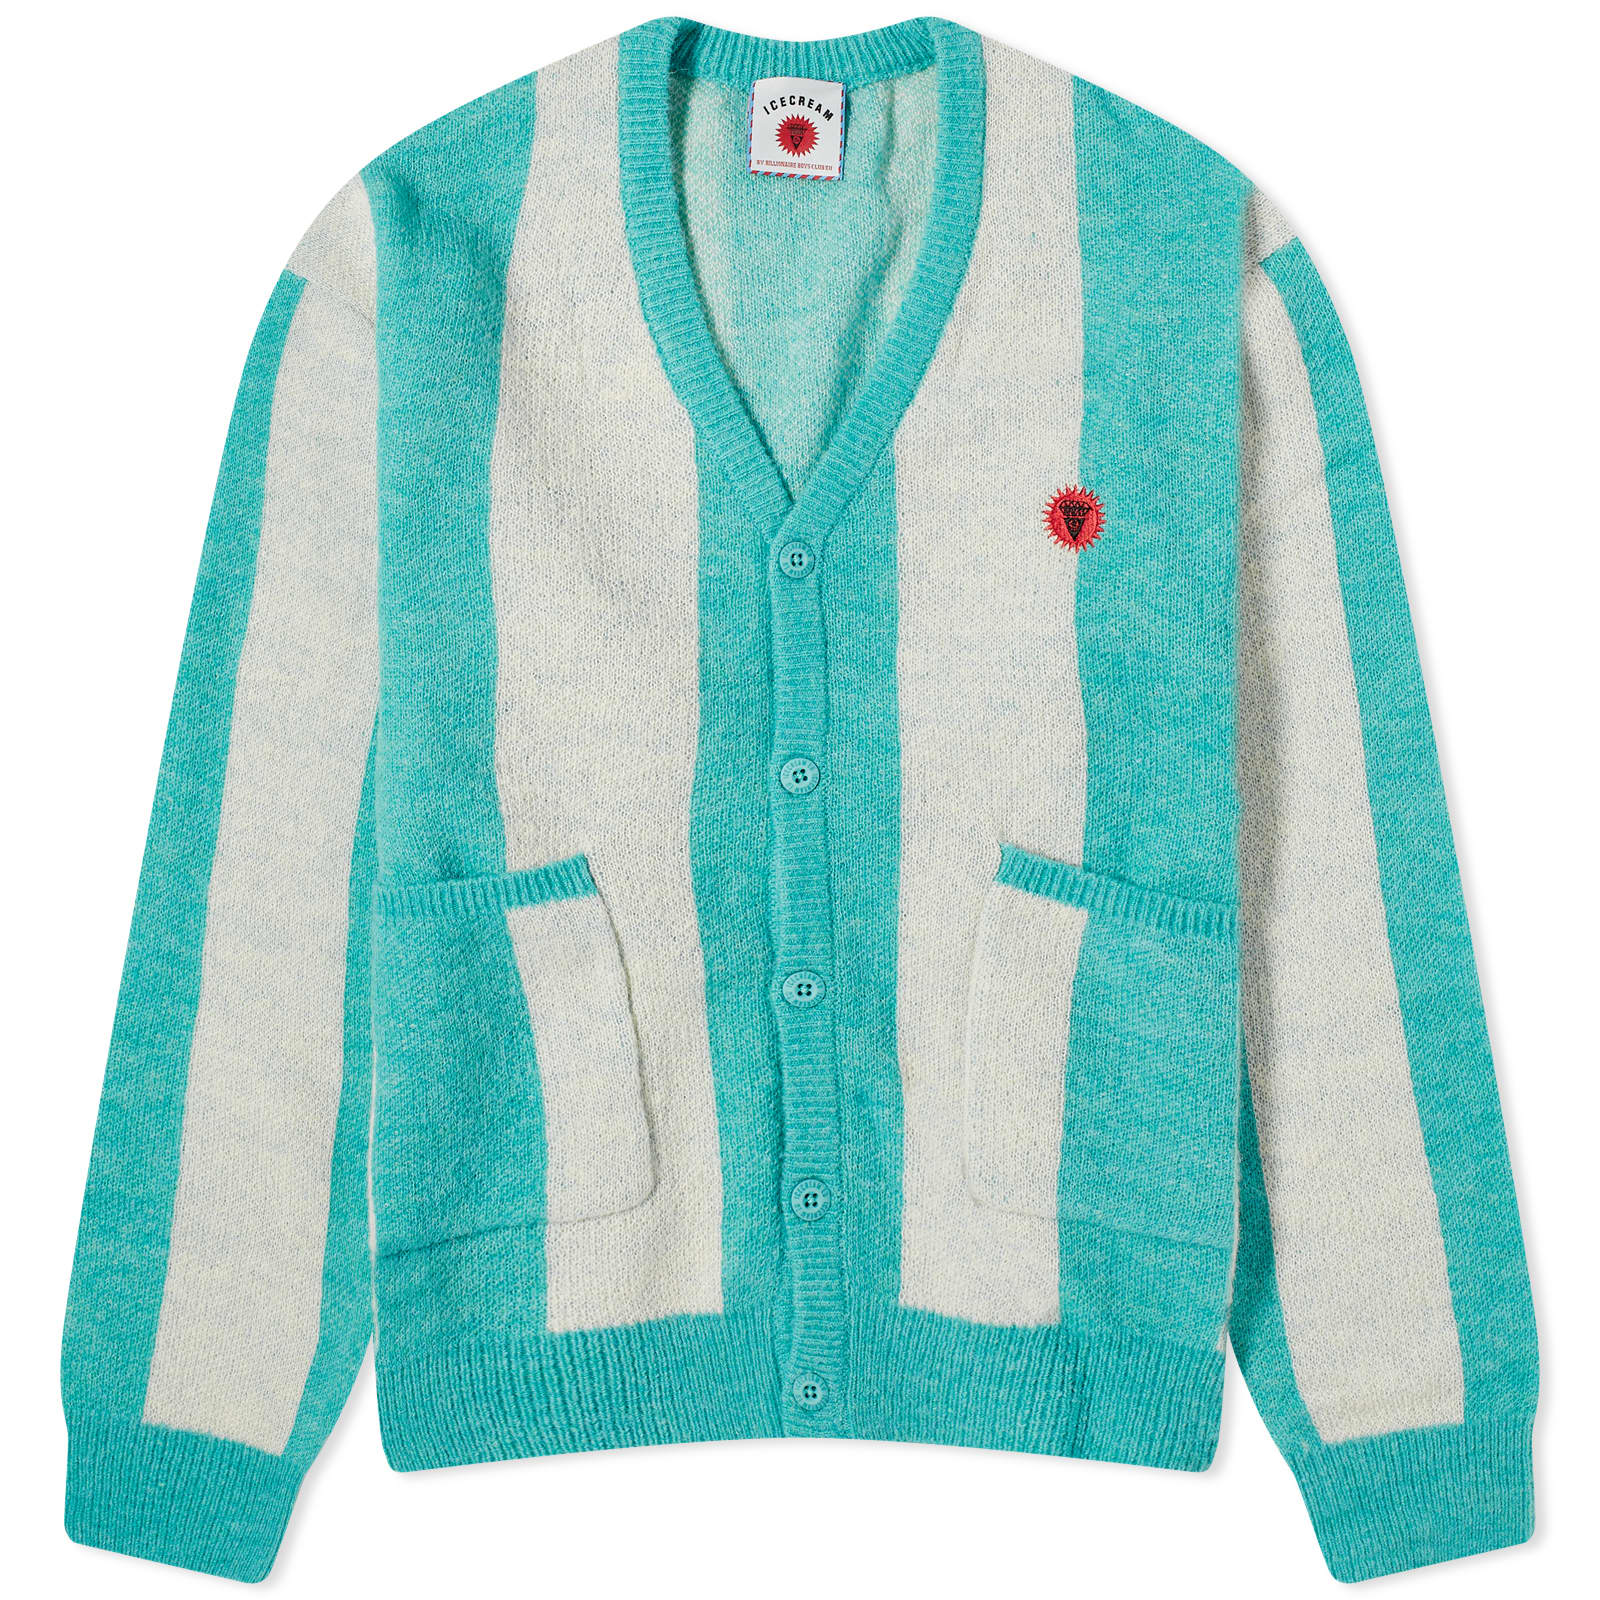 Кардиган Icecream Stripe Knit, цвет Teal Stripe кардиган короткий в полоску из оригинального трикотажа xs белый